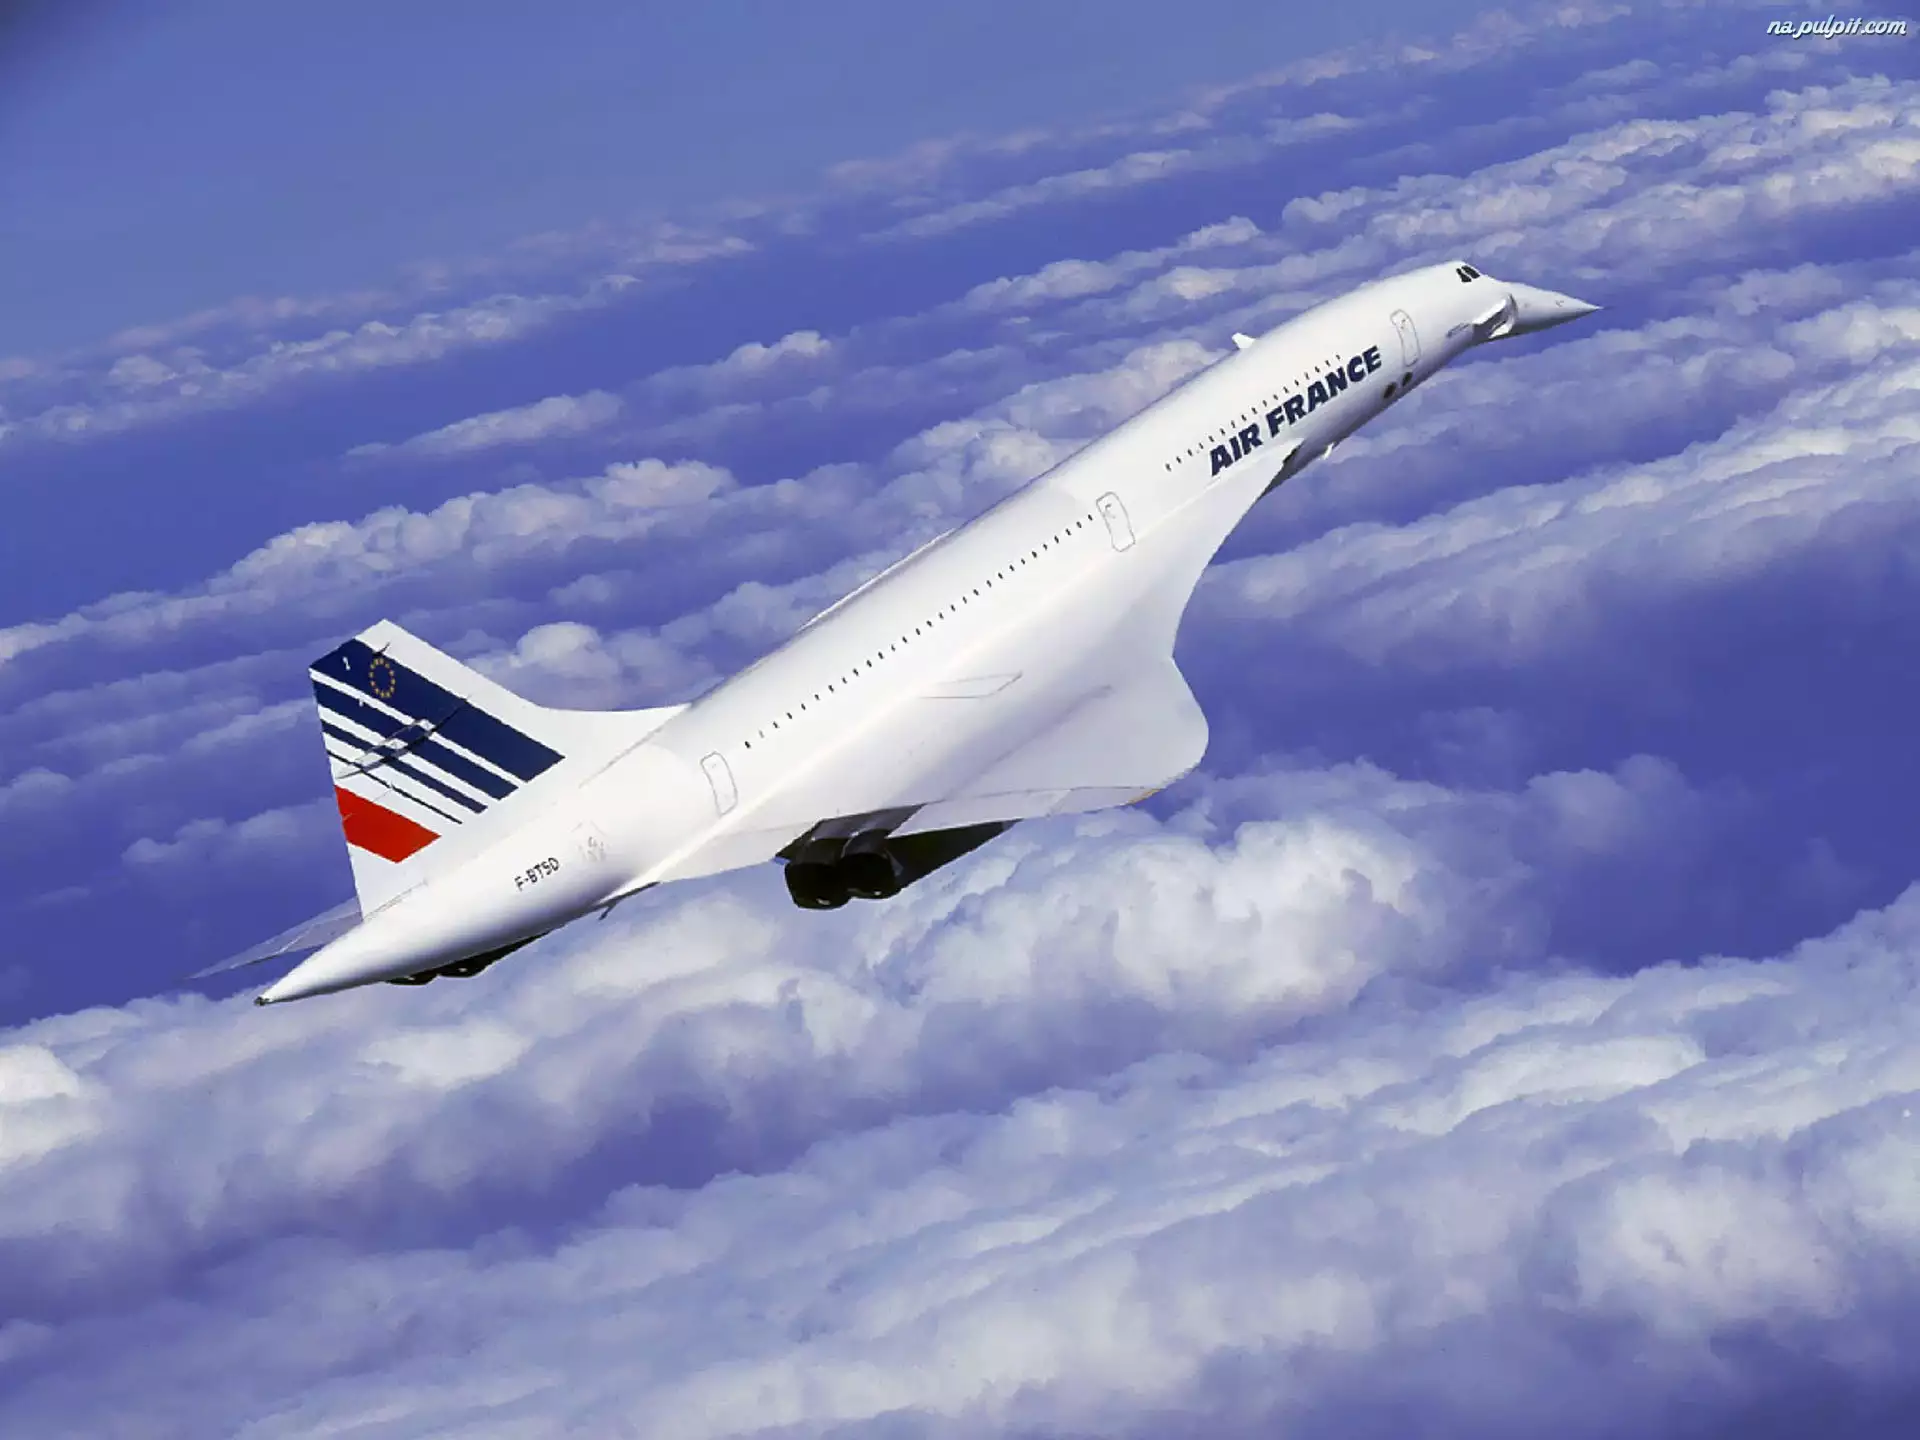 France, Concorde, Air